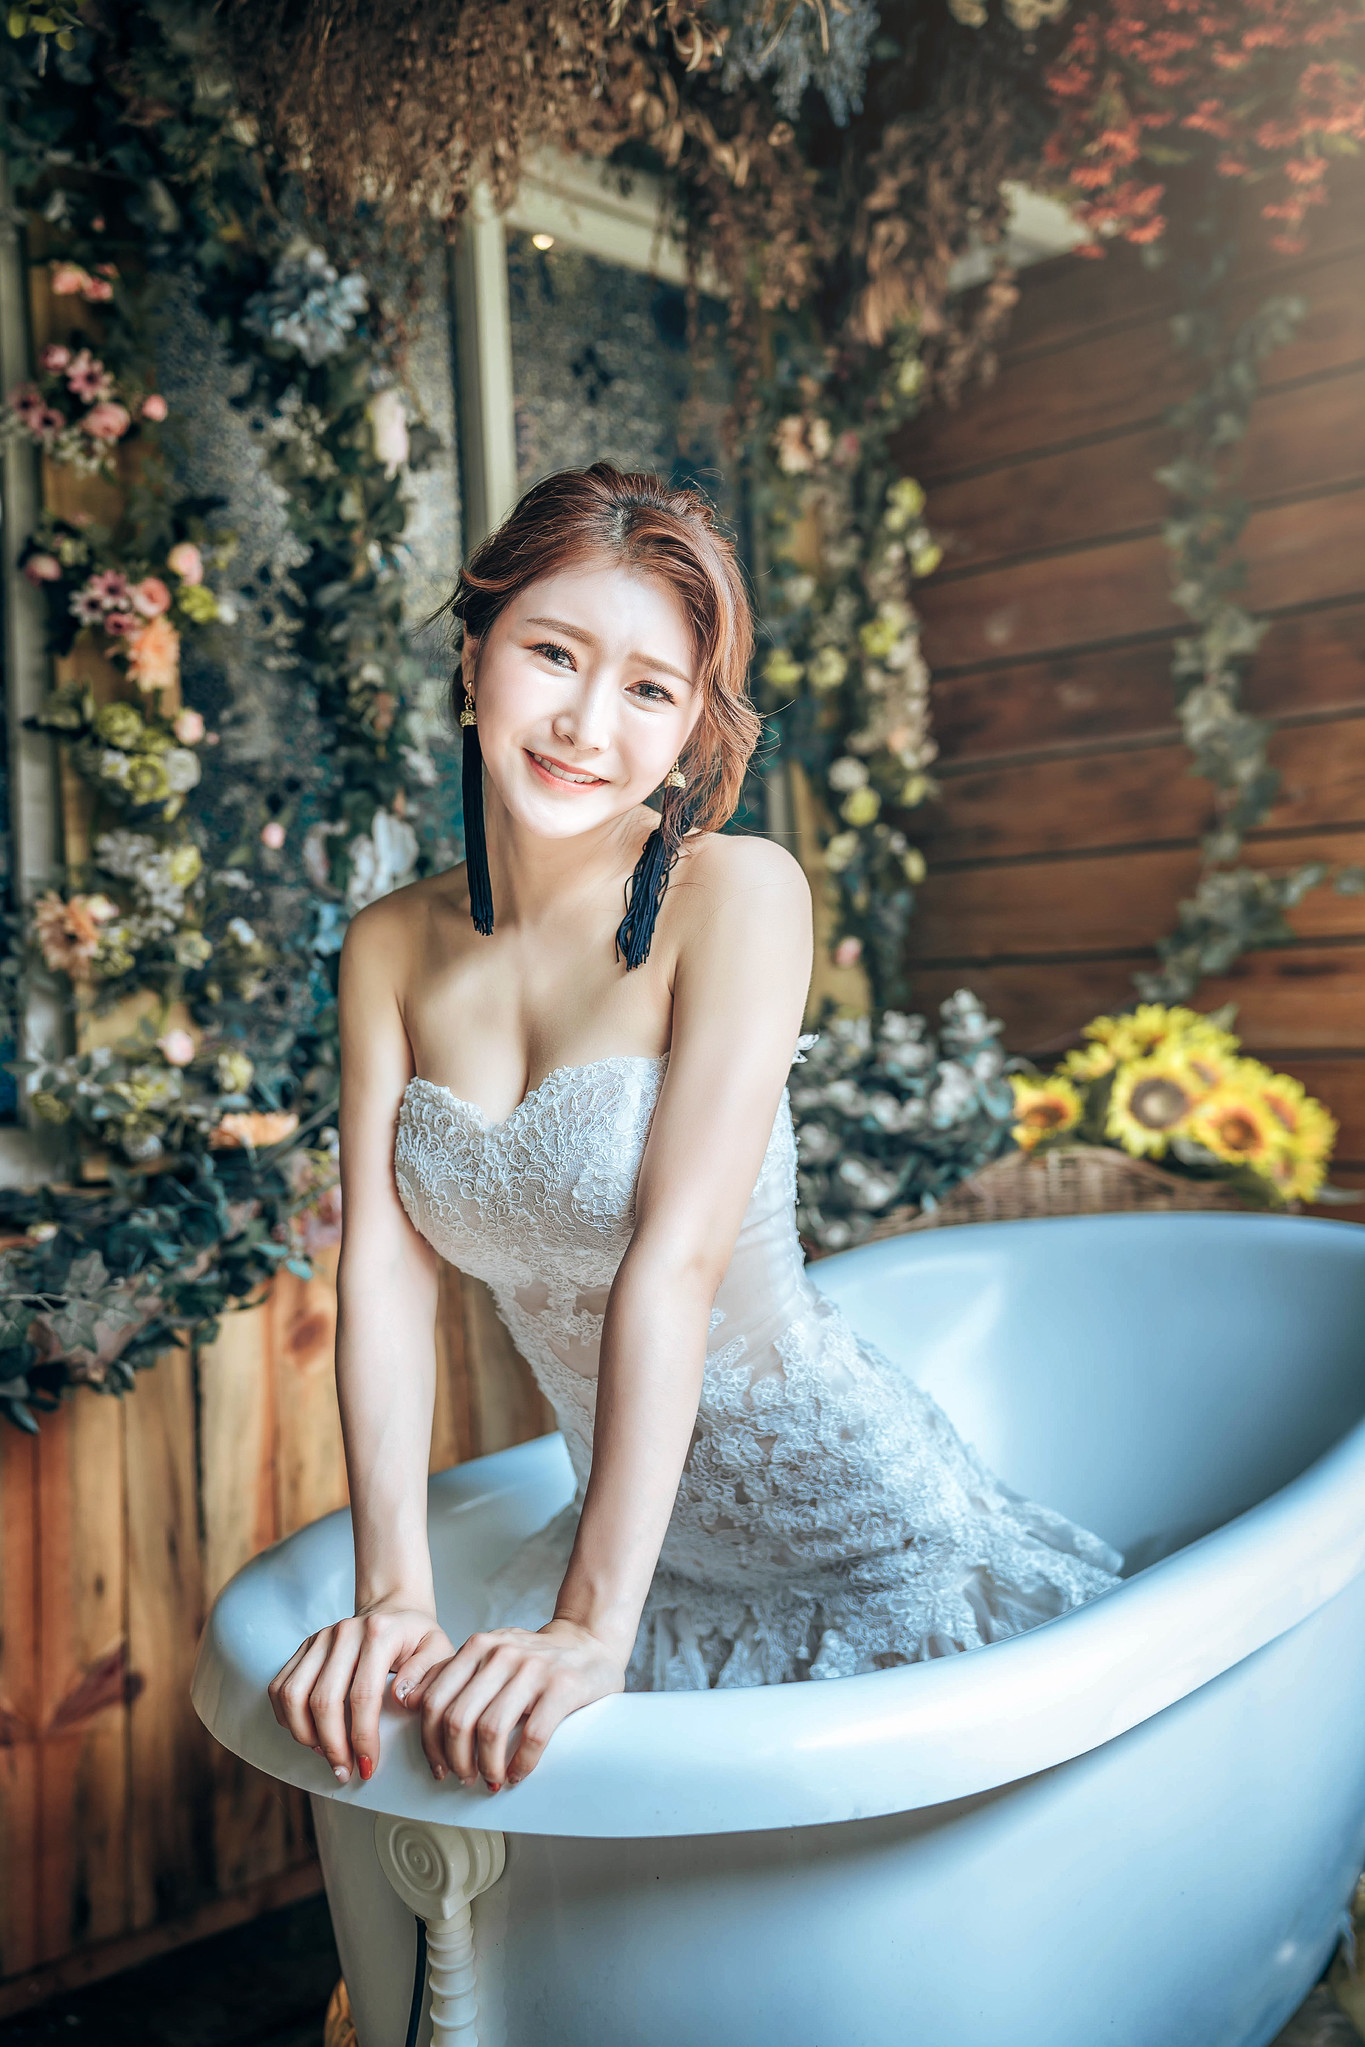 Asian Model Women Indoors Women Indoors Smiling Dress Bathtub In Bathtub Looking At Viewer 1365x2047